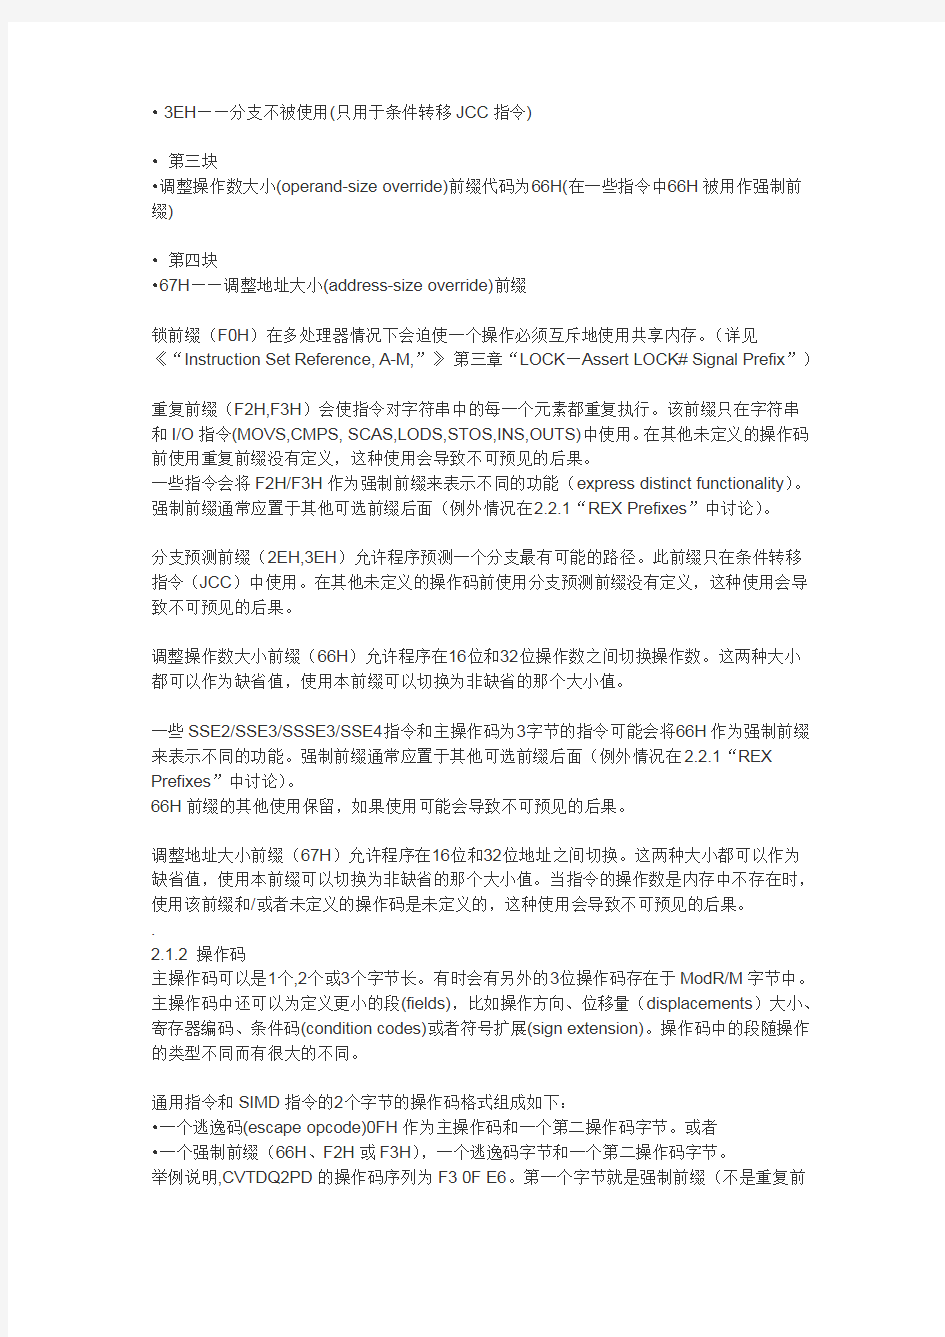 intel指令手册2.1节中文